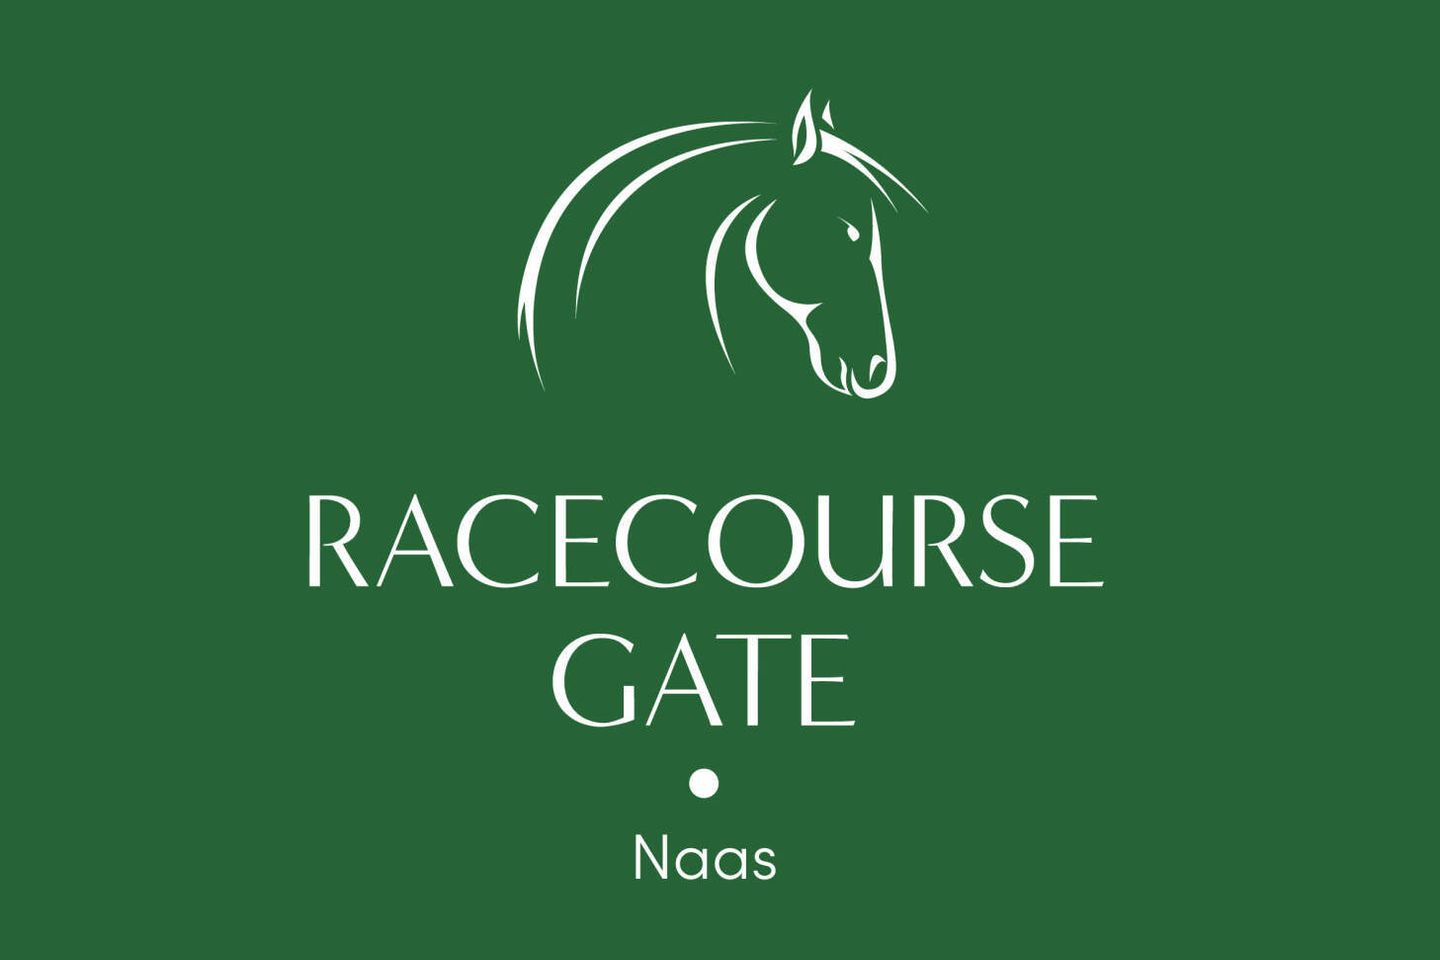 5 Bed Semi Detached, Racecourse Gate, 5 Bed Semi Detached, Racecourse Gate, Naas, Co. Kildare